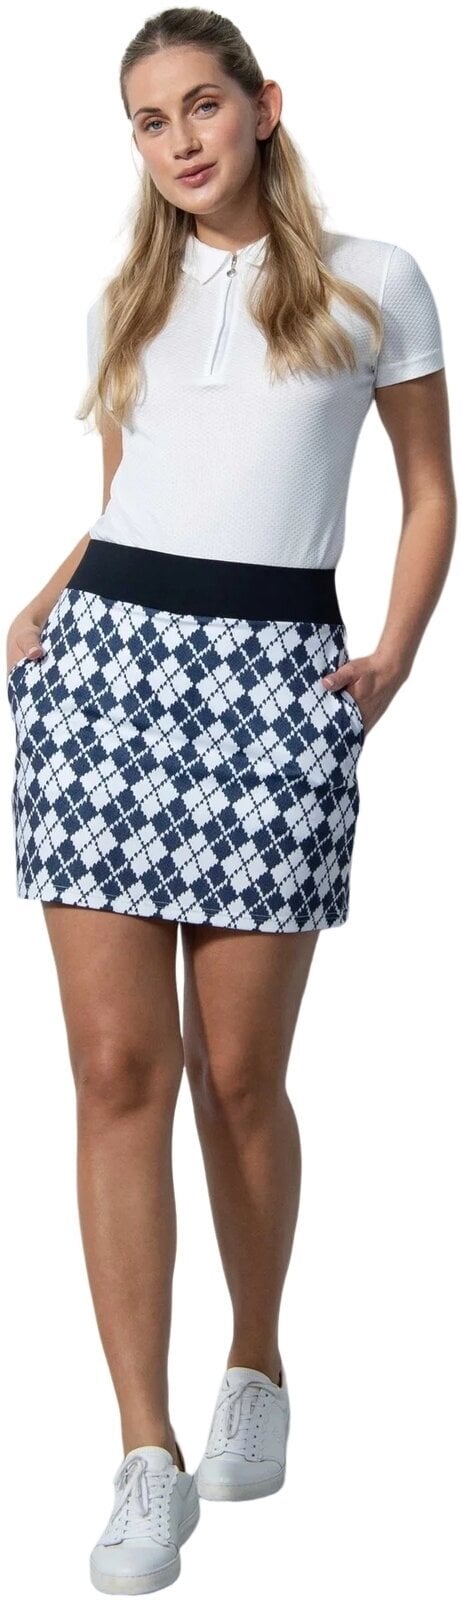 Skirt / Dress Daily Sports Abruzzo Skort 45 cm Argyle XS